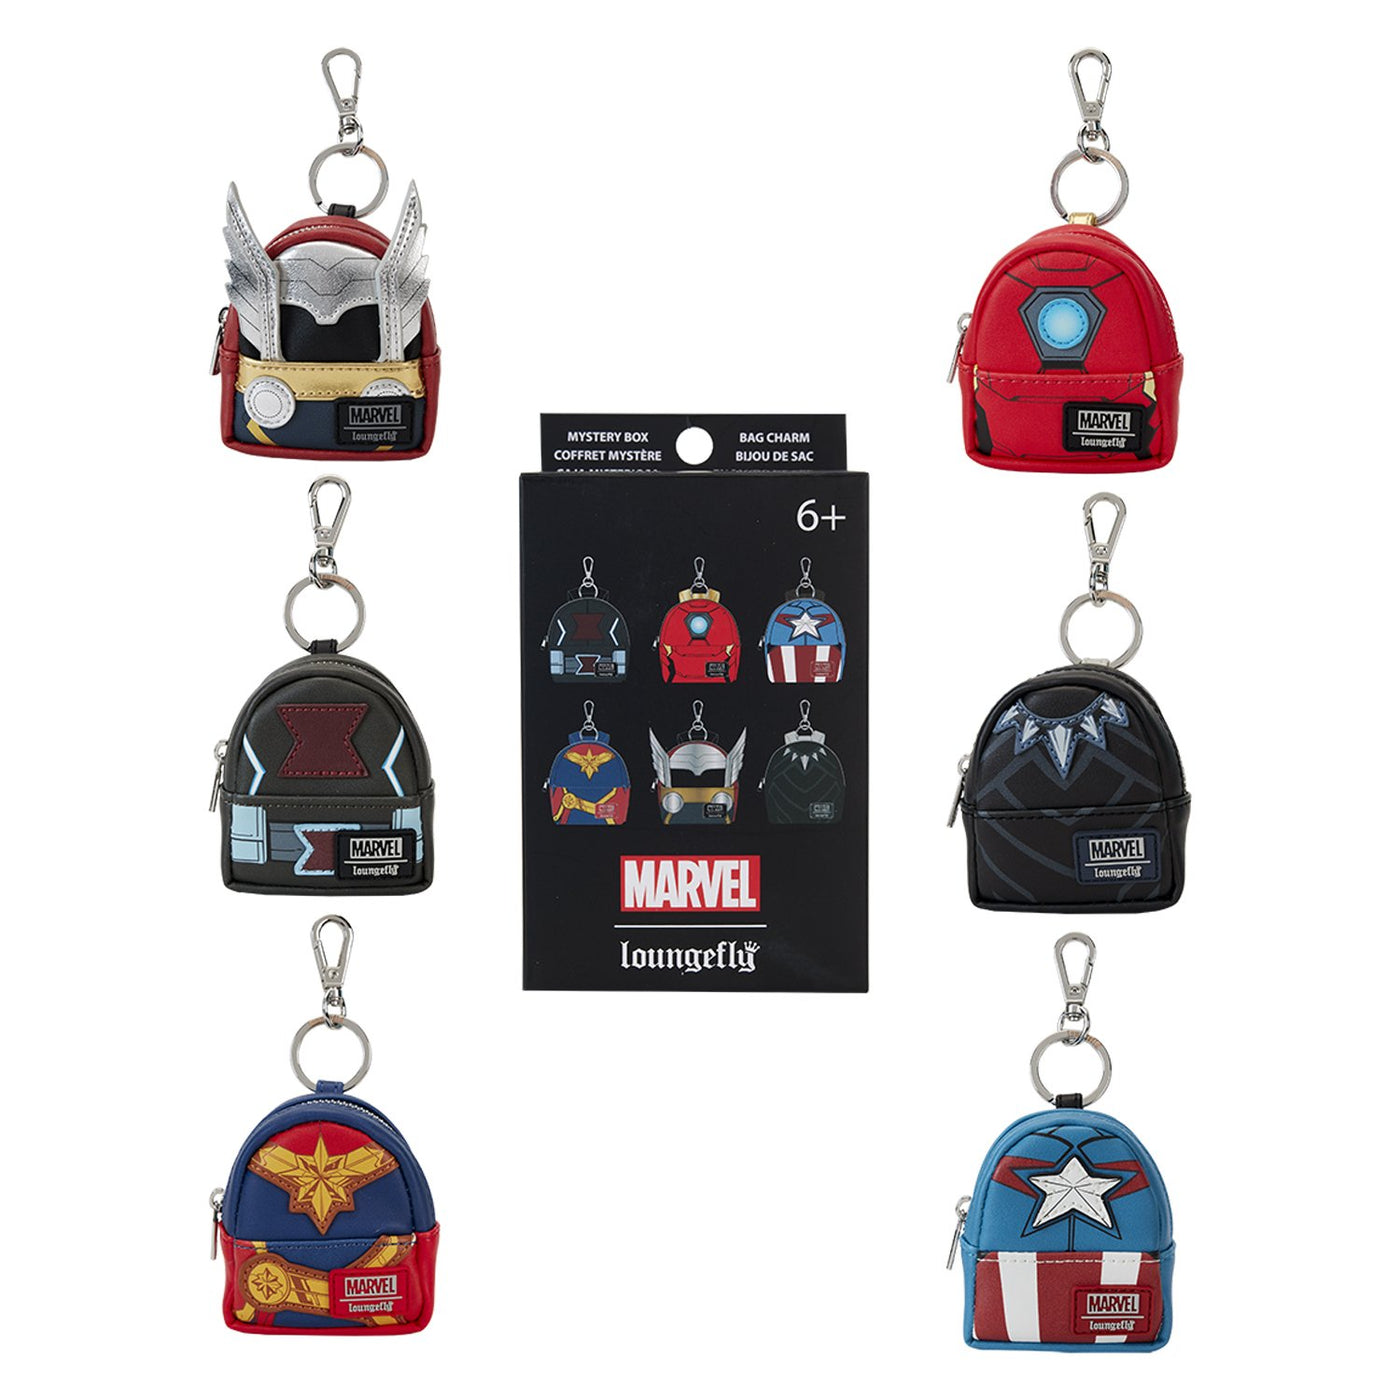 Loungefly Marvel Avengers Cosplay Mini Backpack Mystery Box Keychains - Set